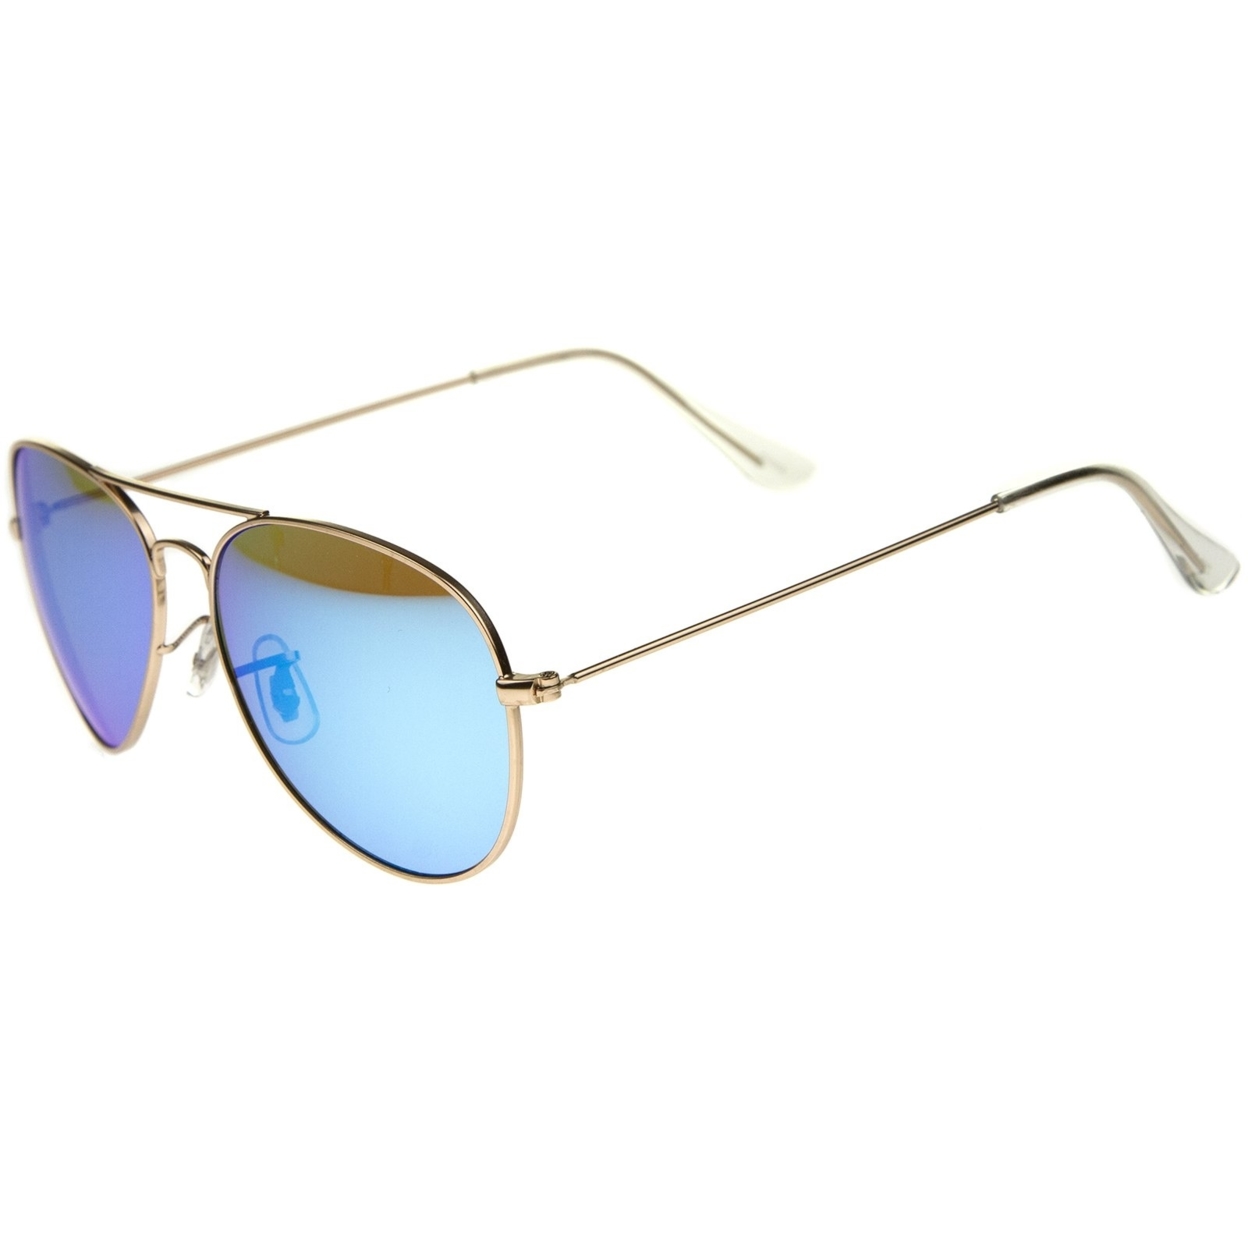 Premium Nickel Plated Frame Multi-Coated Mirror Lens Aviator Sunglasses 59mm - Gold / Yellow Mirror